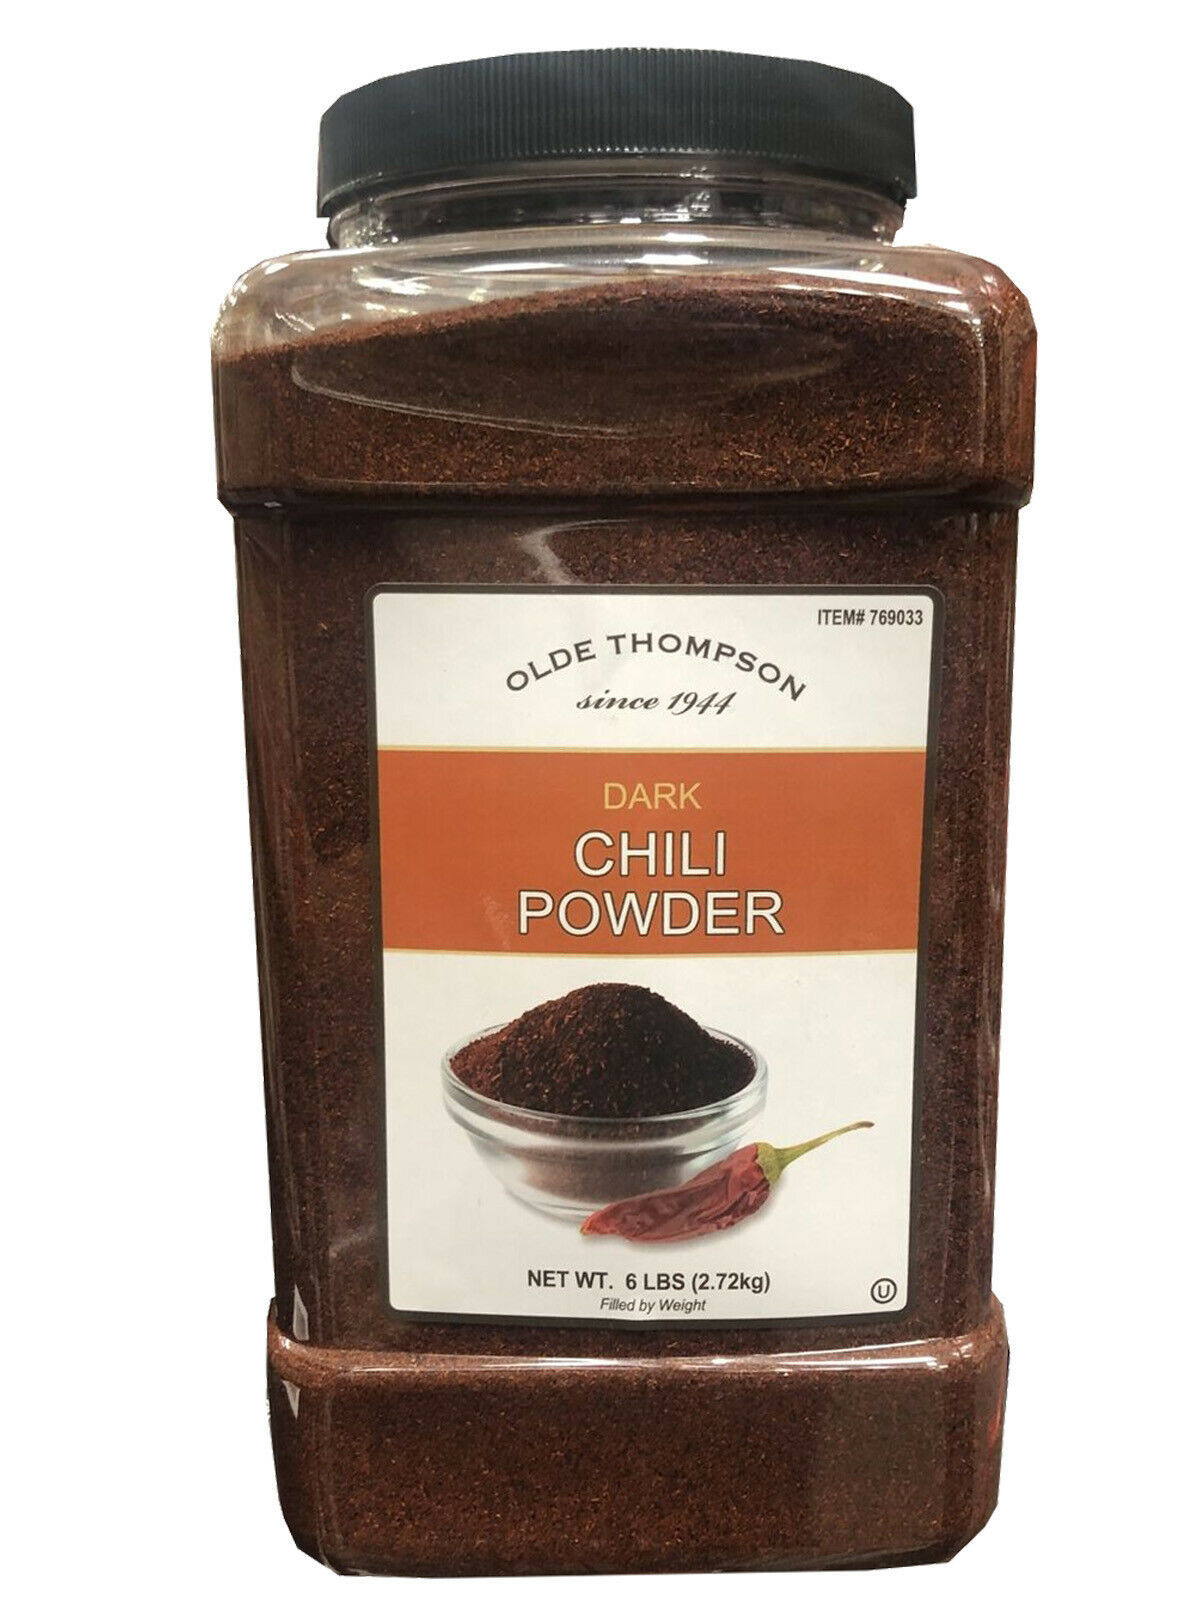 Olde Thompson Dark Chili Powder, 6 lbs - $38.56